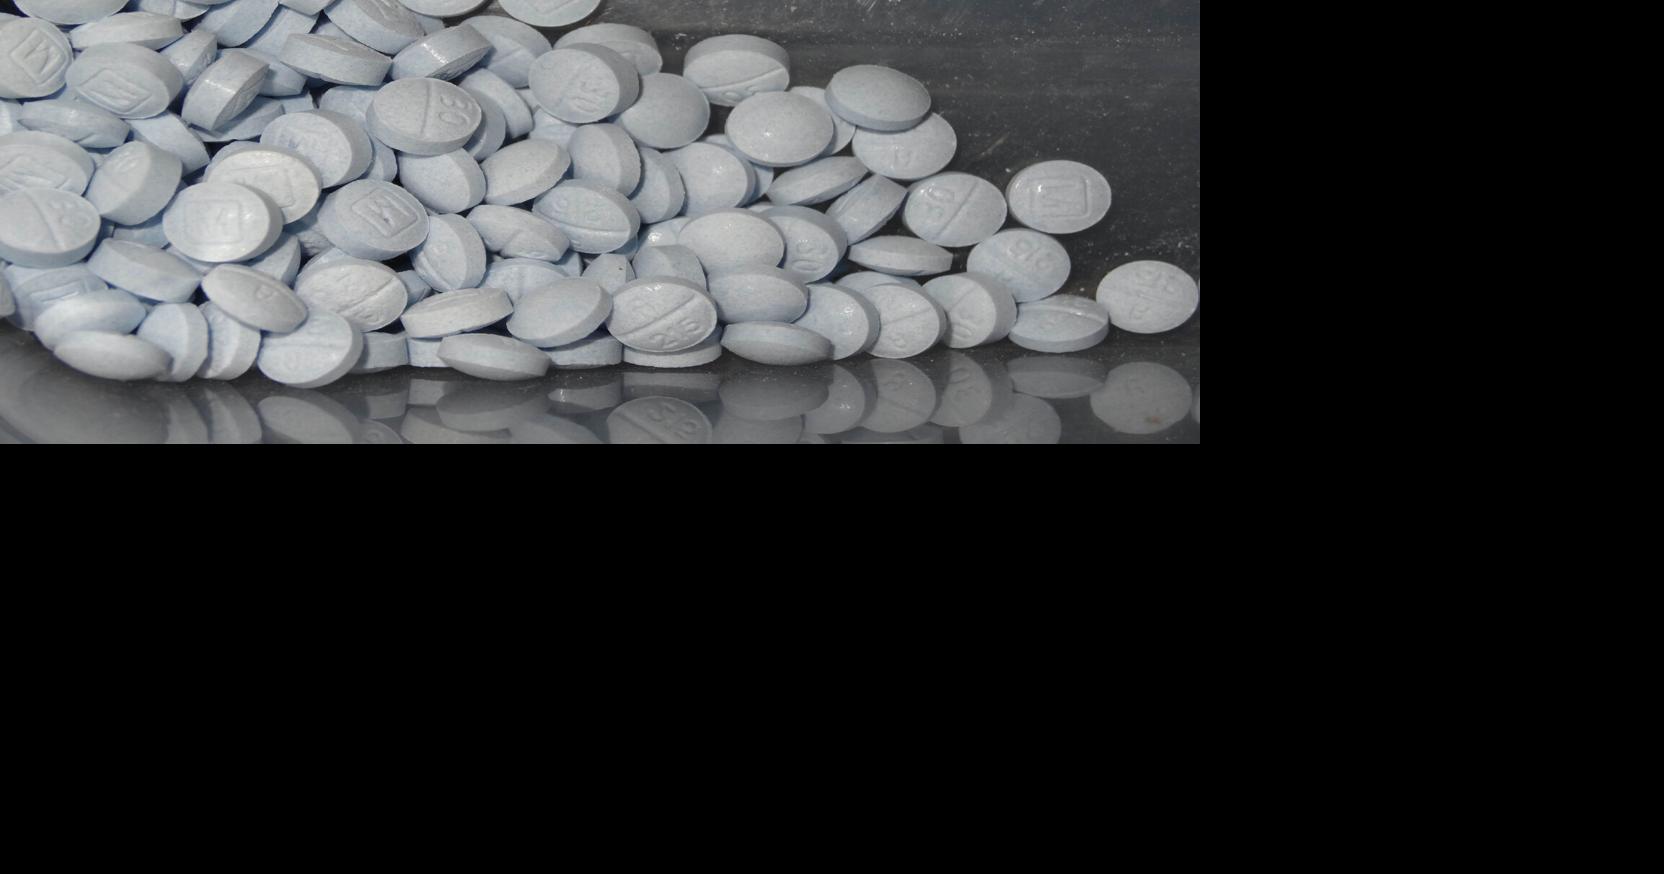 Report: South Carolina drug overdose deaths increased 23% in 2021